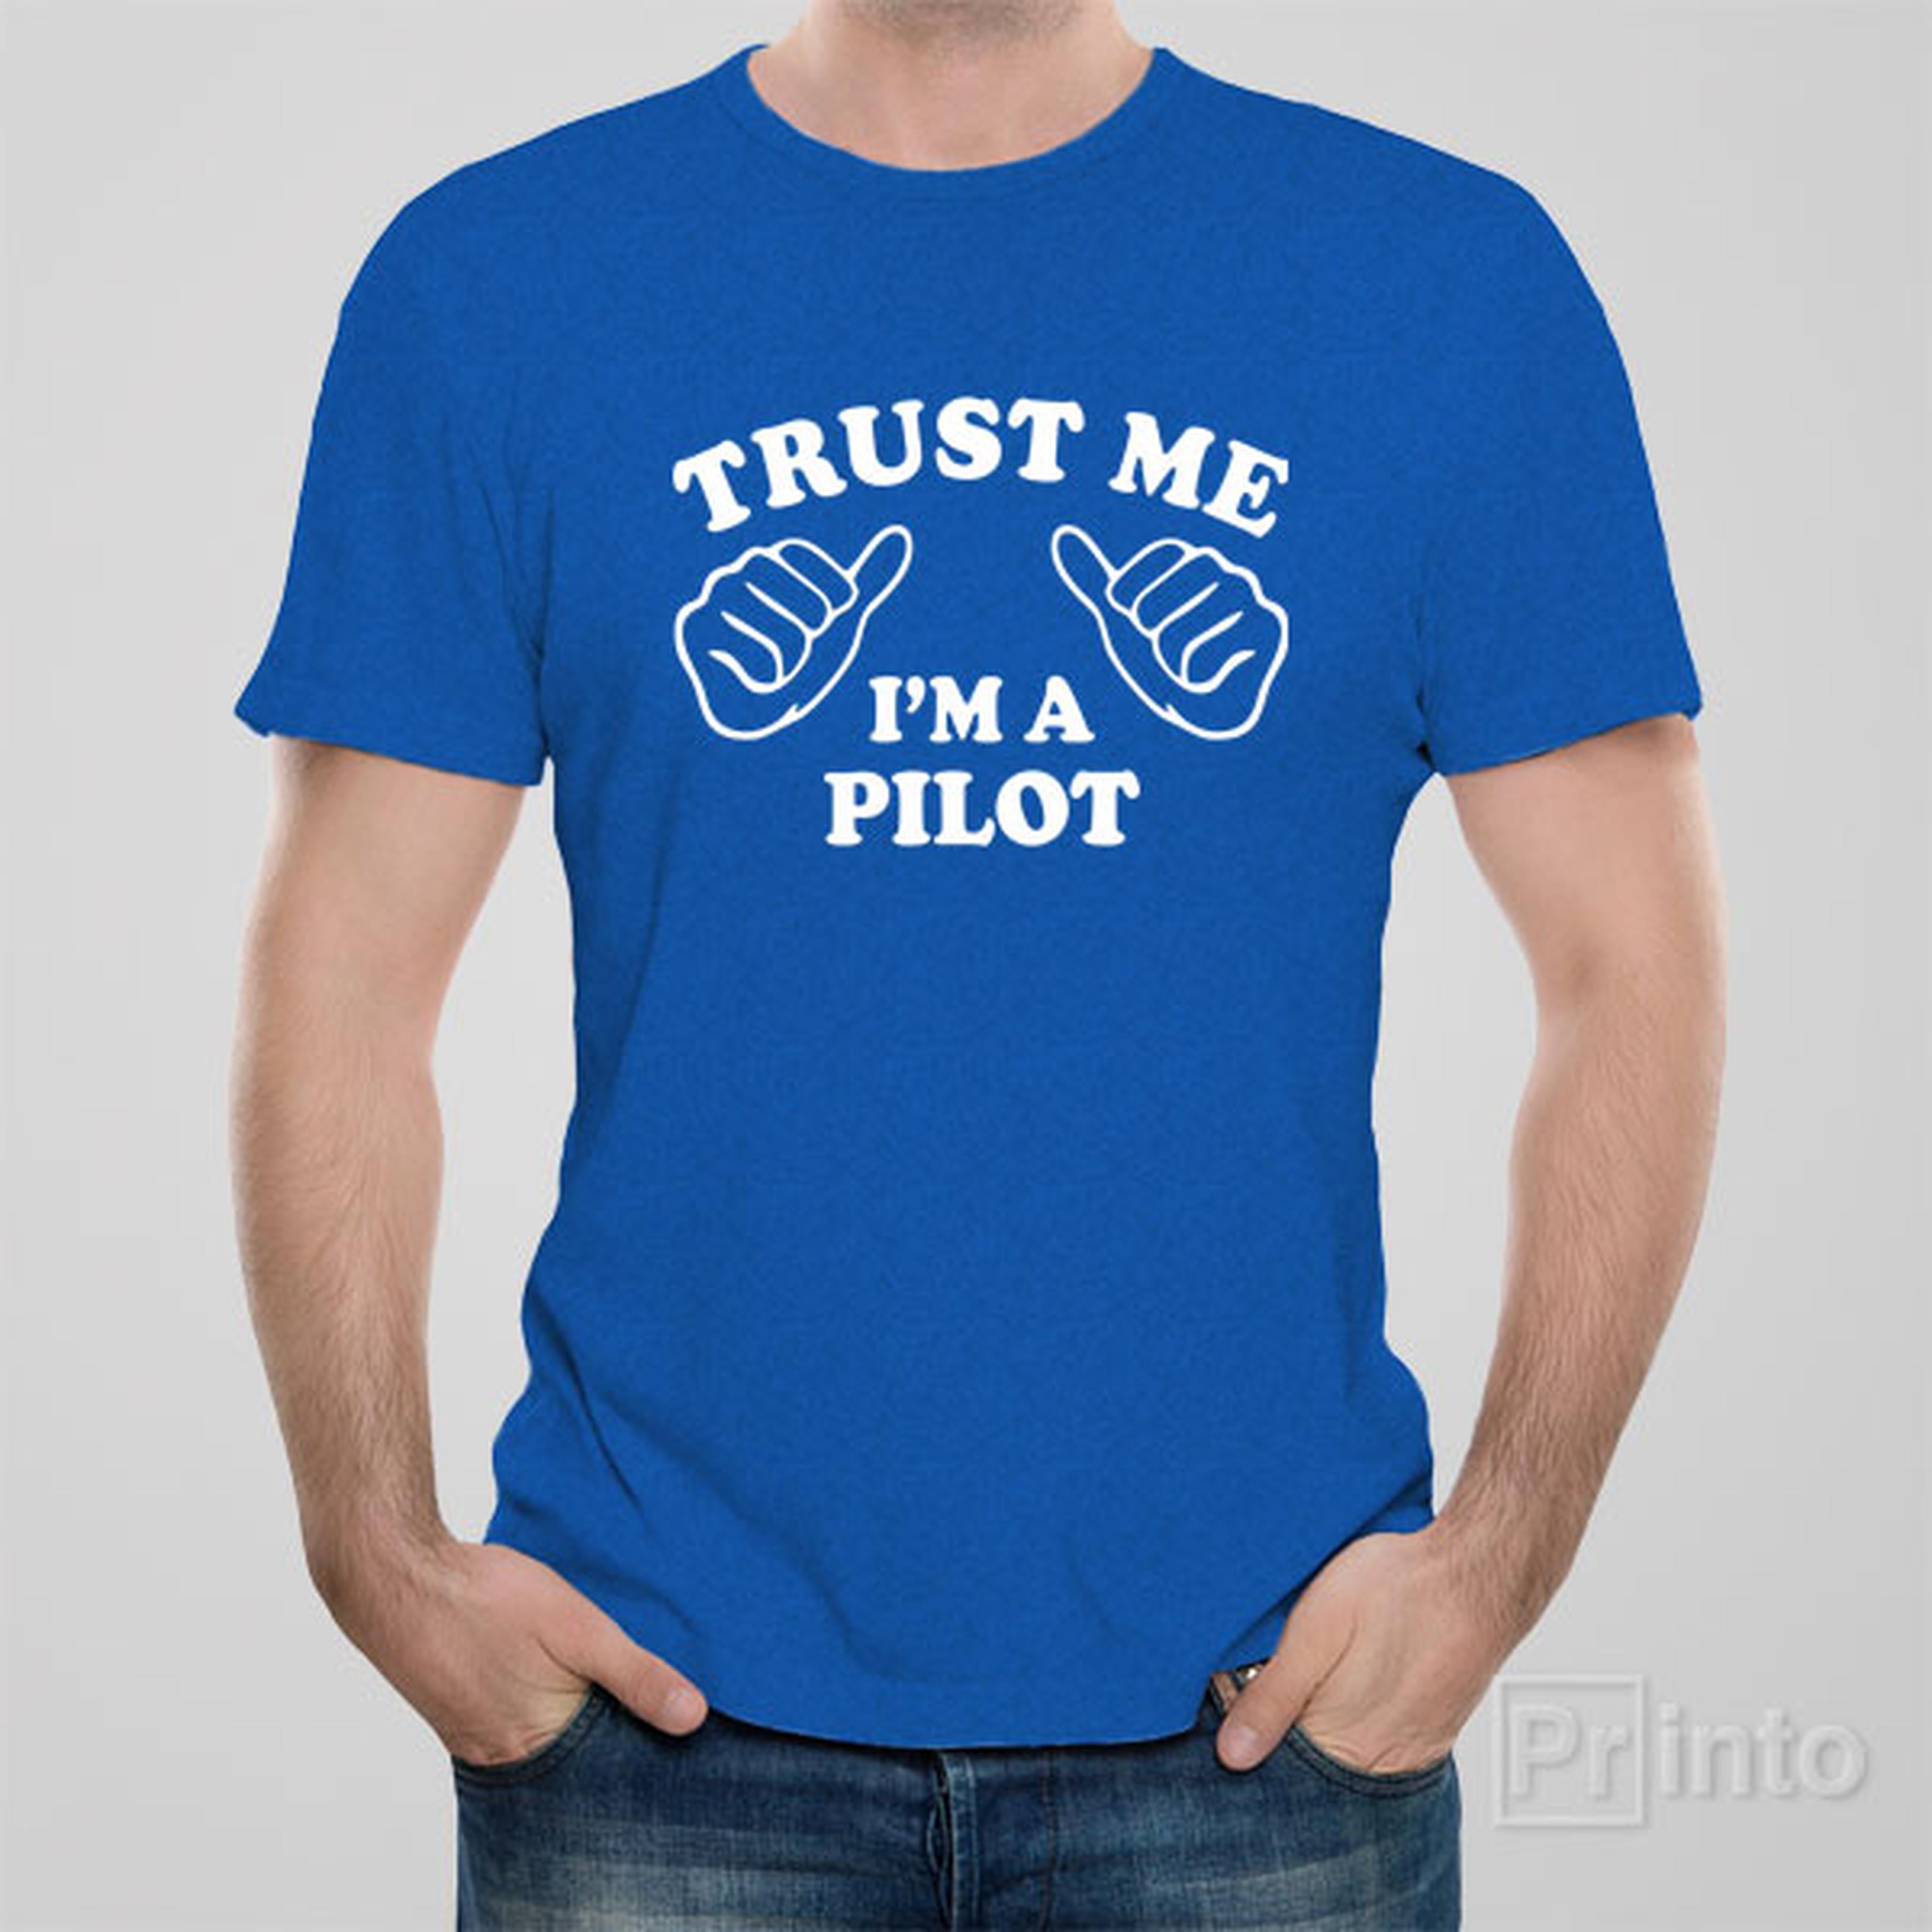 trust-me-i-am-a-pilot-t-shirt